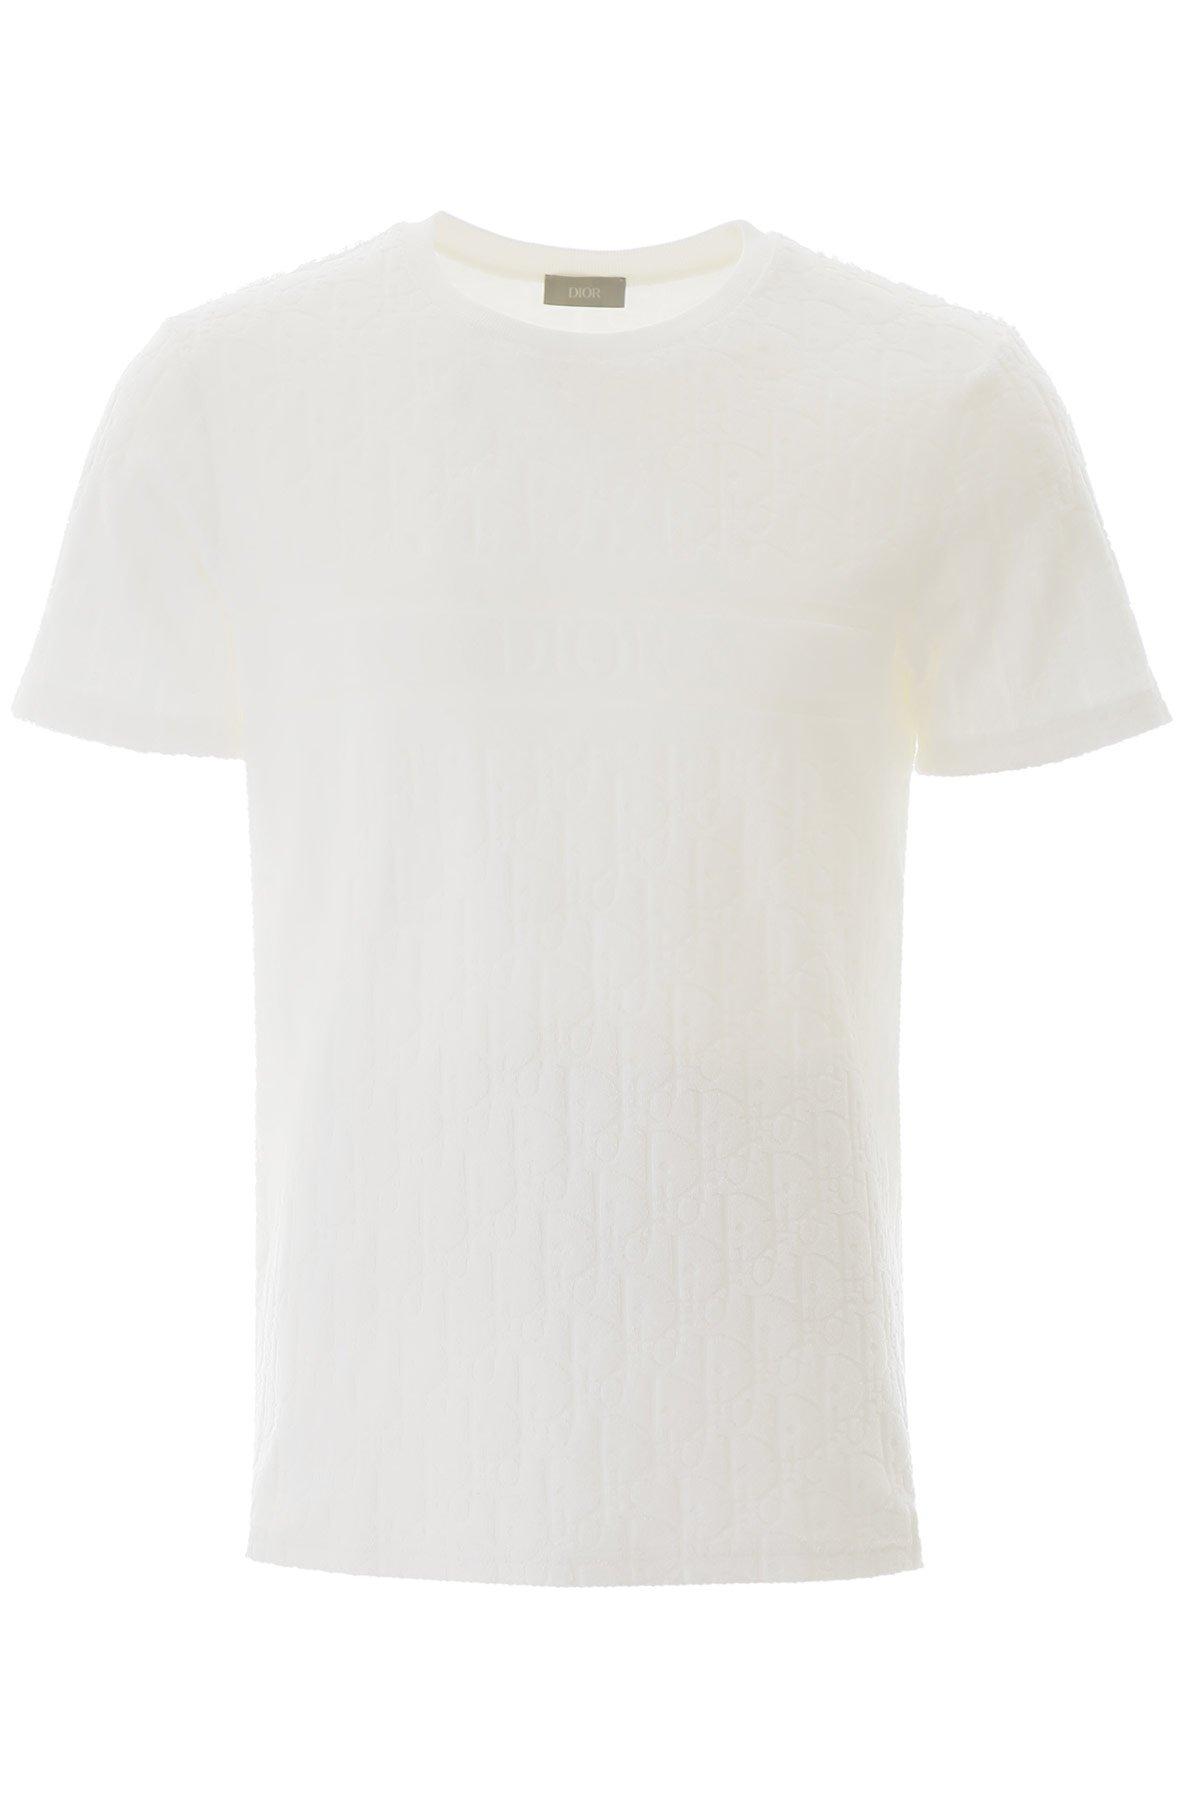 Dior Oblique T-shirt in White for Men - Lyst